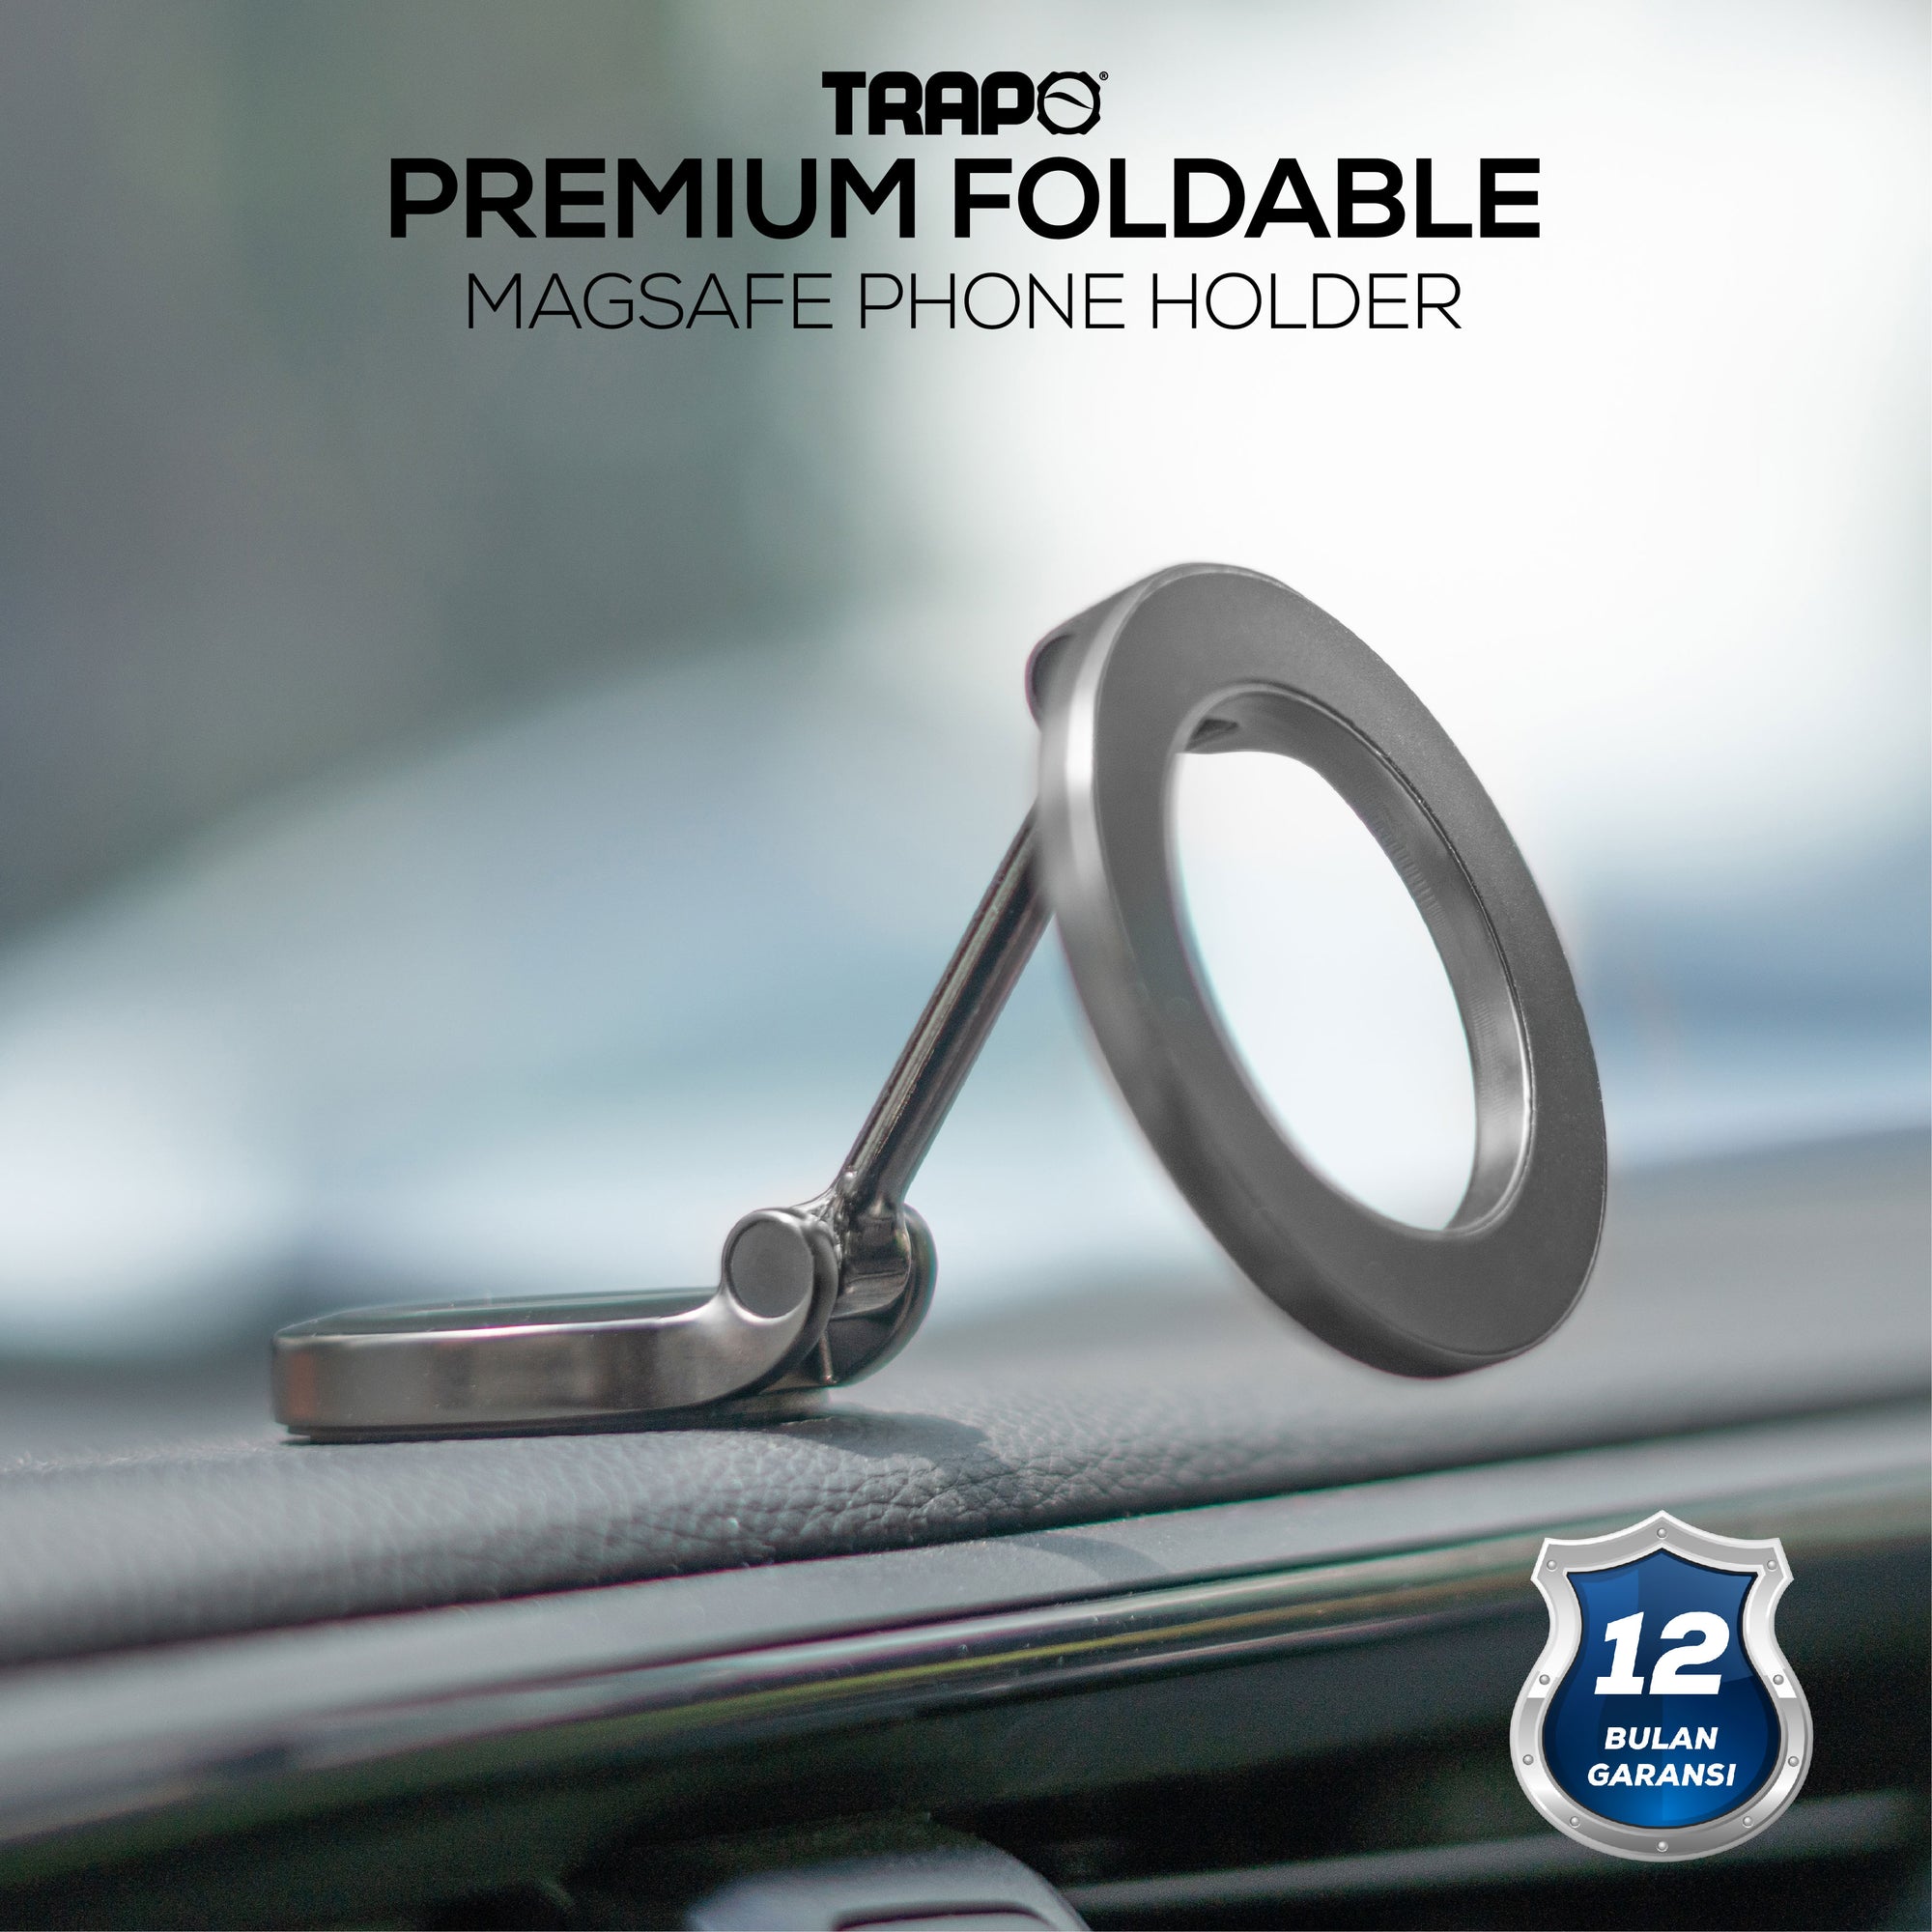 Trapo Premium Foldable Magsafe Car Phone Holder